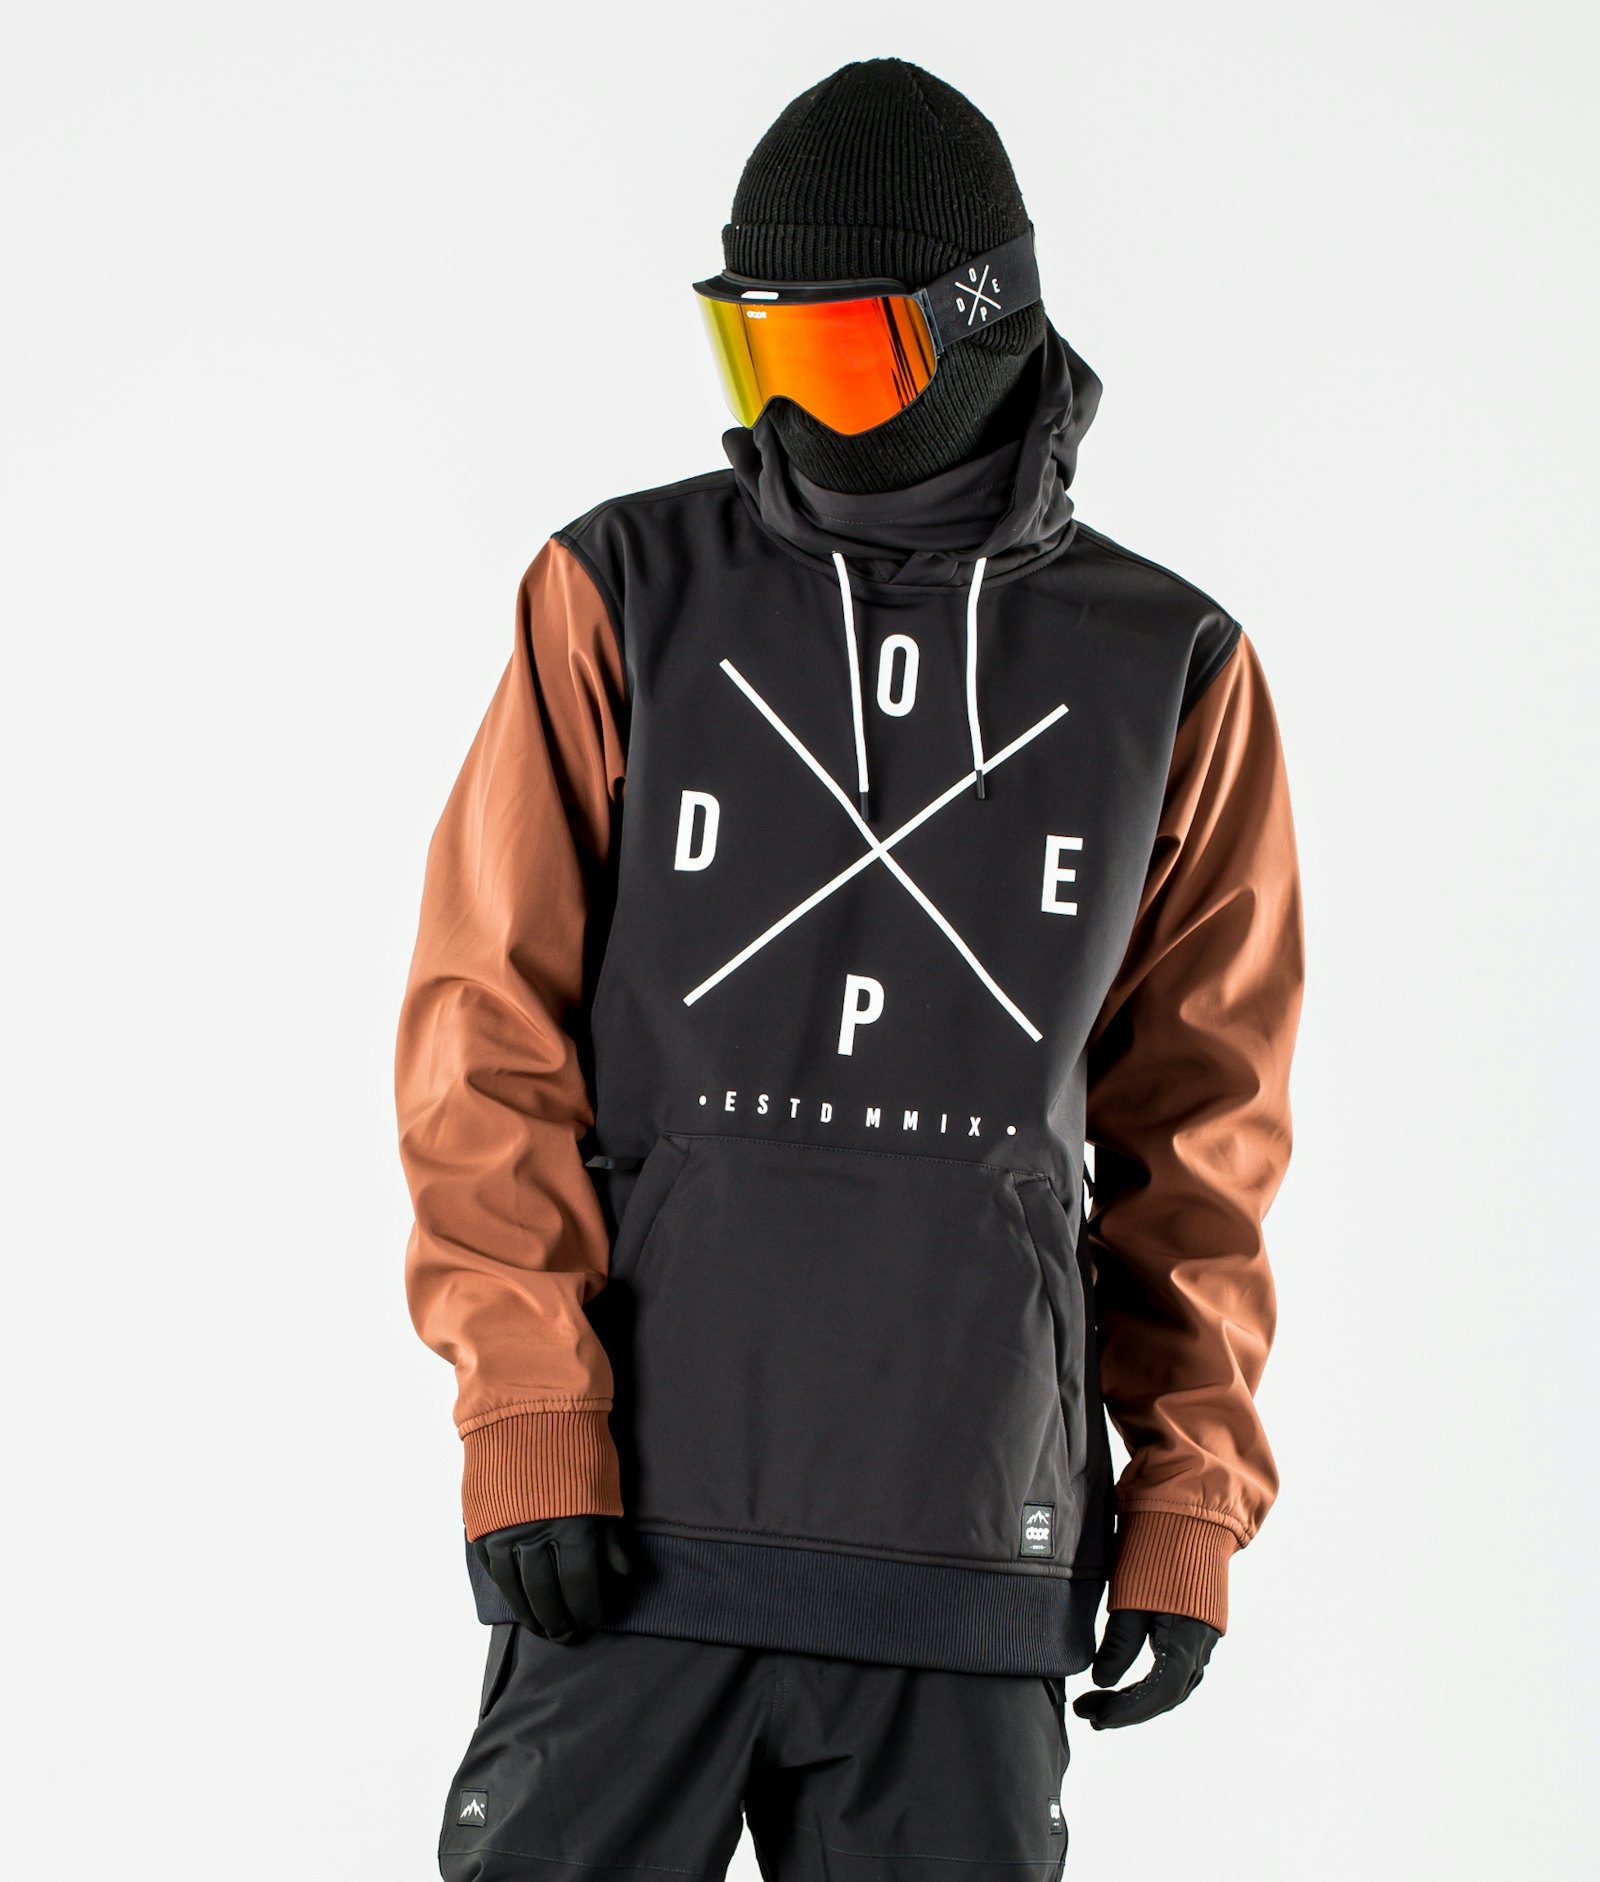 Yeti 10k Veste Snowboard Homme Black/Adobe